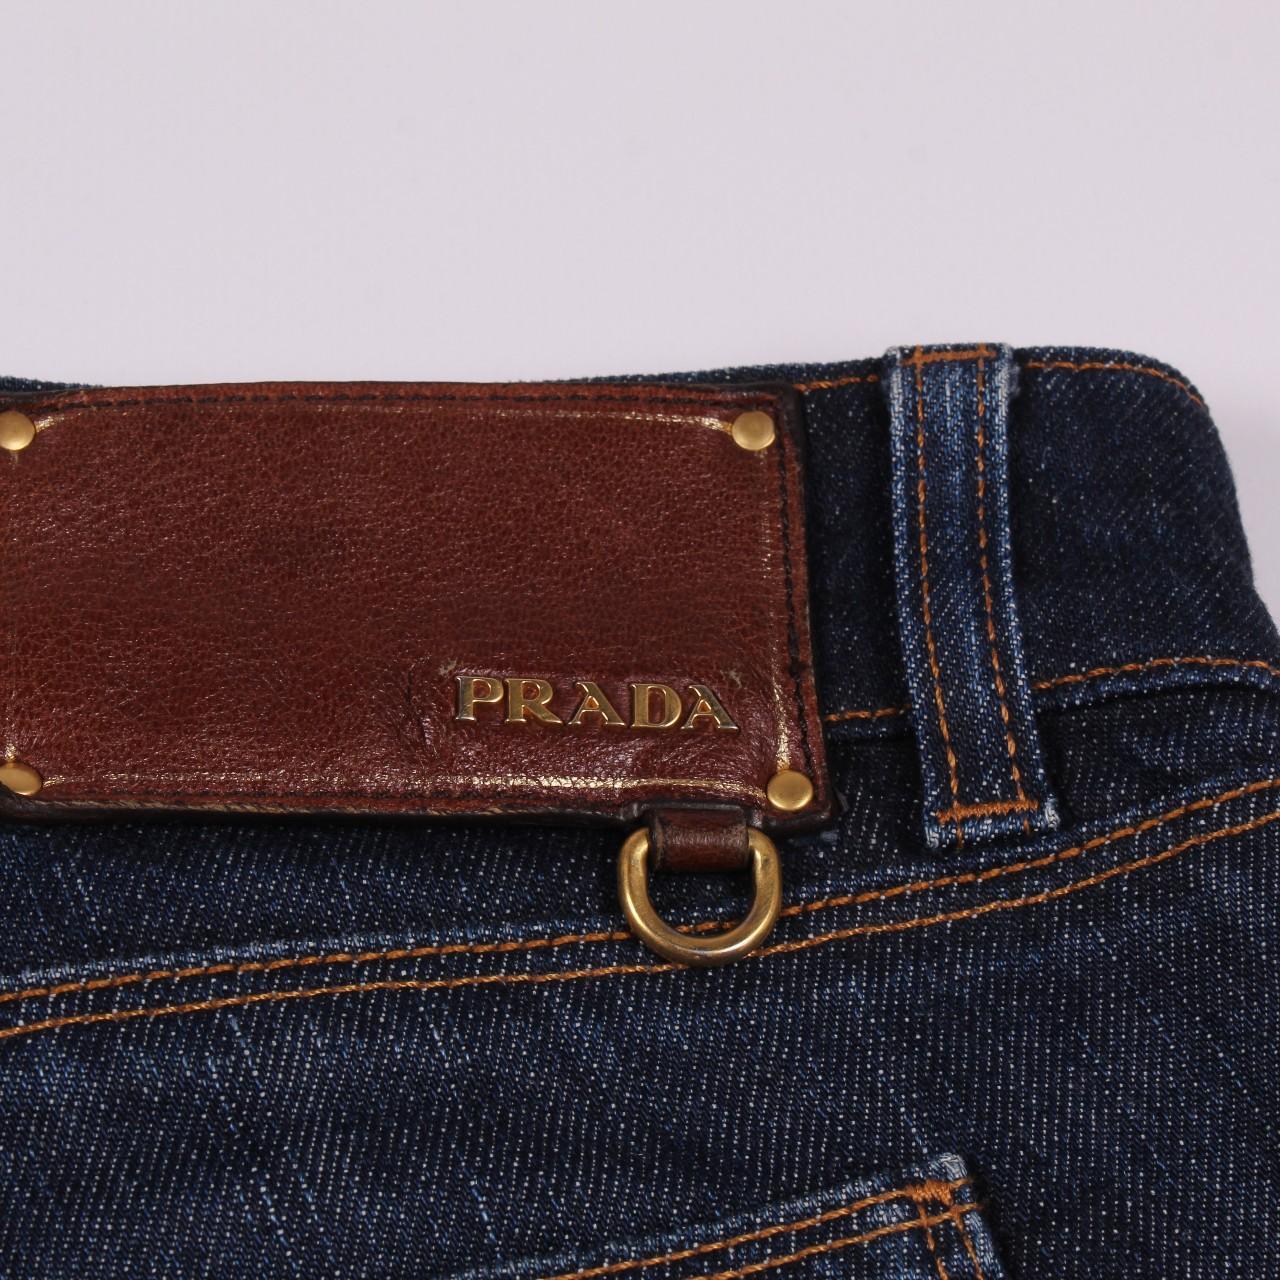 Prada Contour fit jeans  Jeans fit, Clothes design, Prada